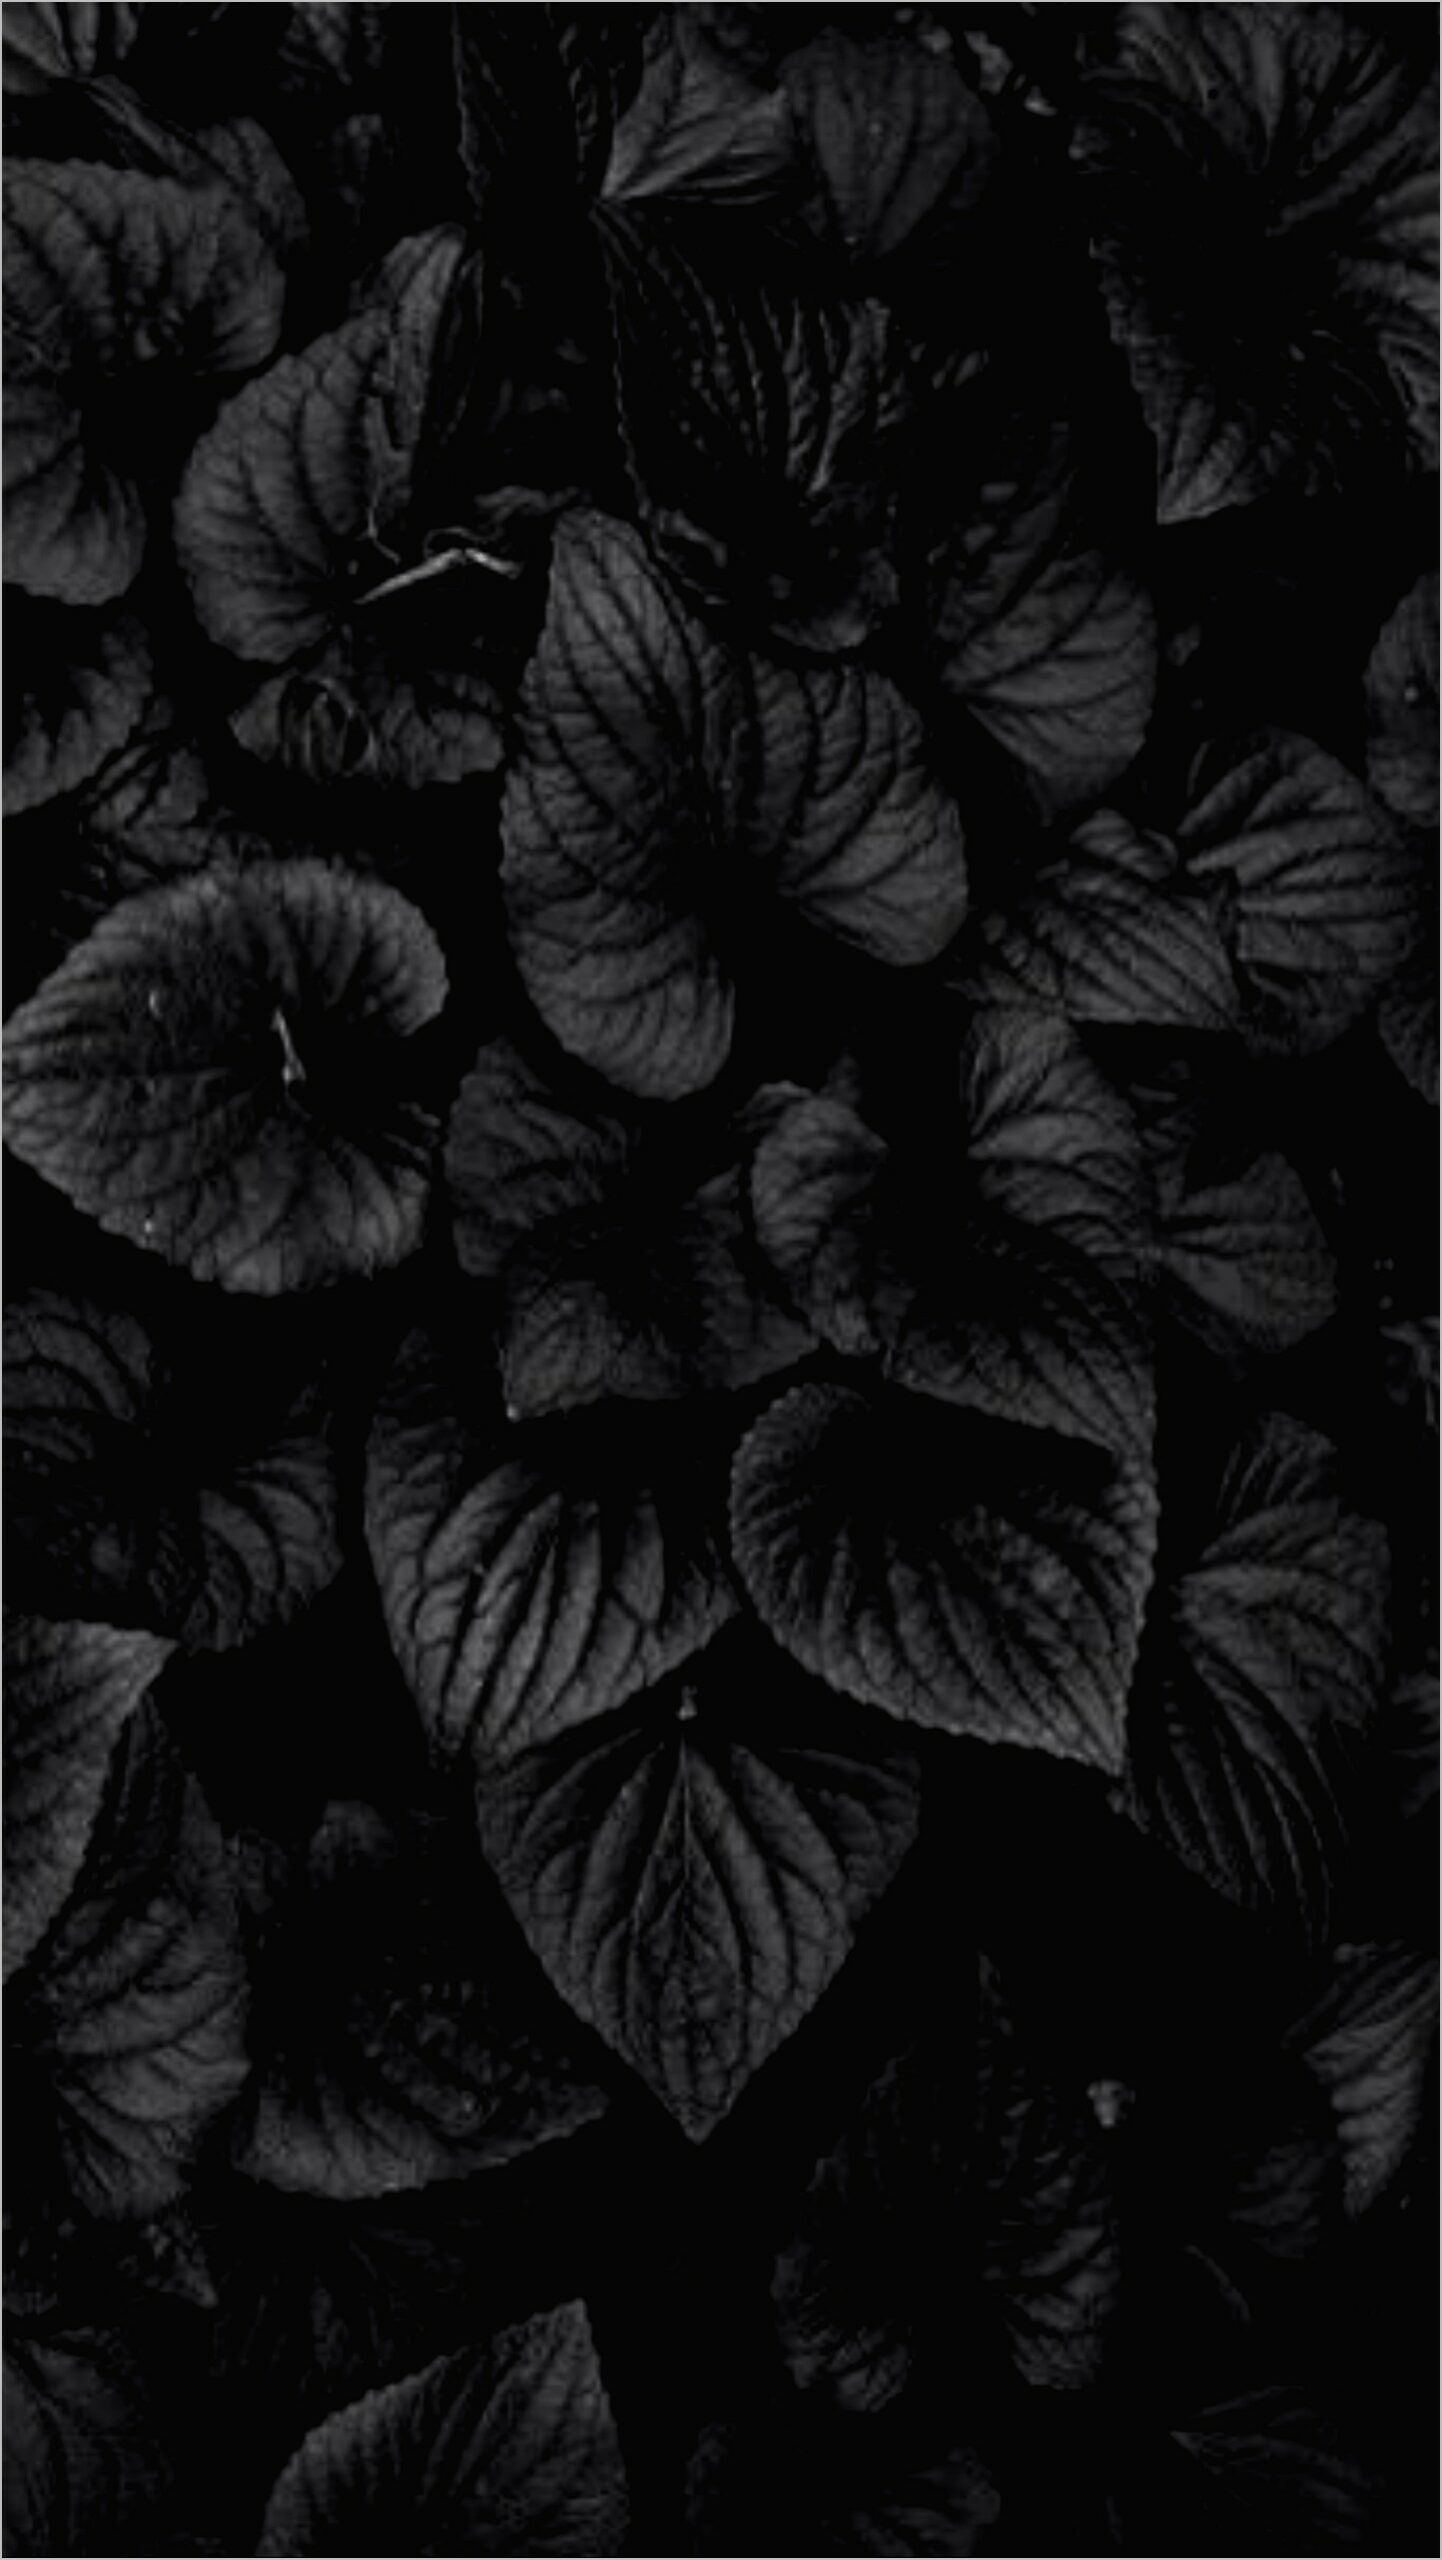 Dark Android Wallpaper 4k. Black flowers wallpaper, Cool wallpaper black and white, Dark flowers